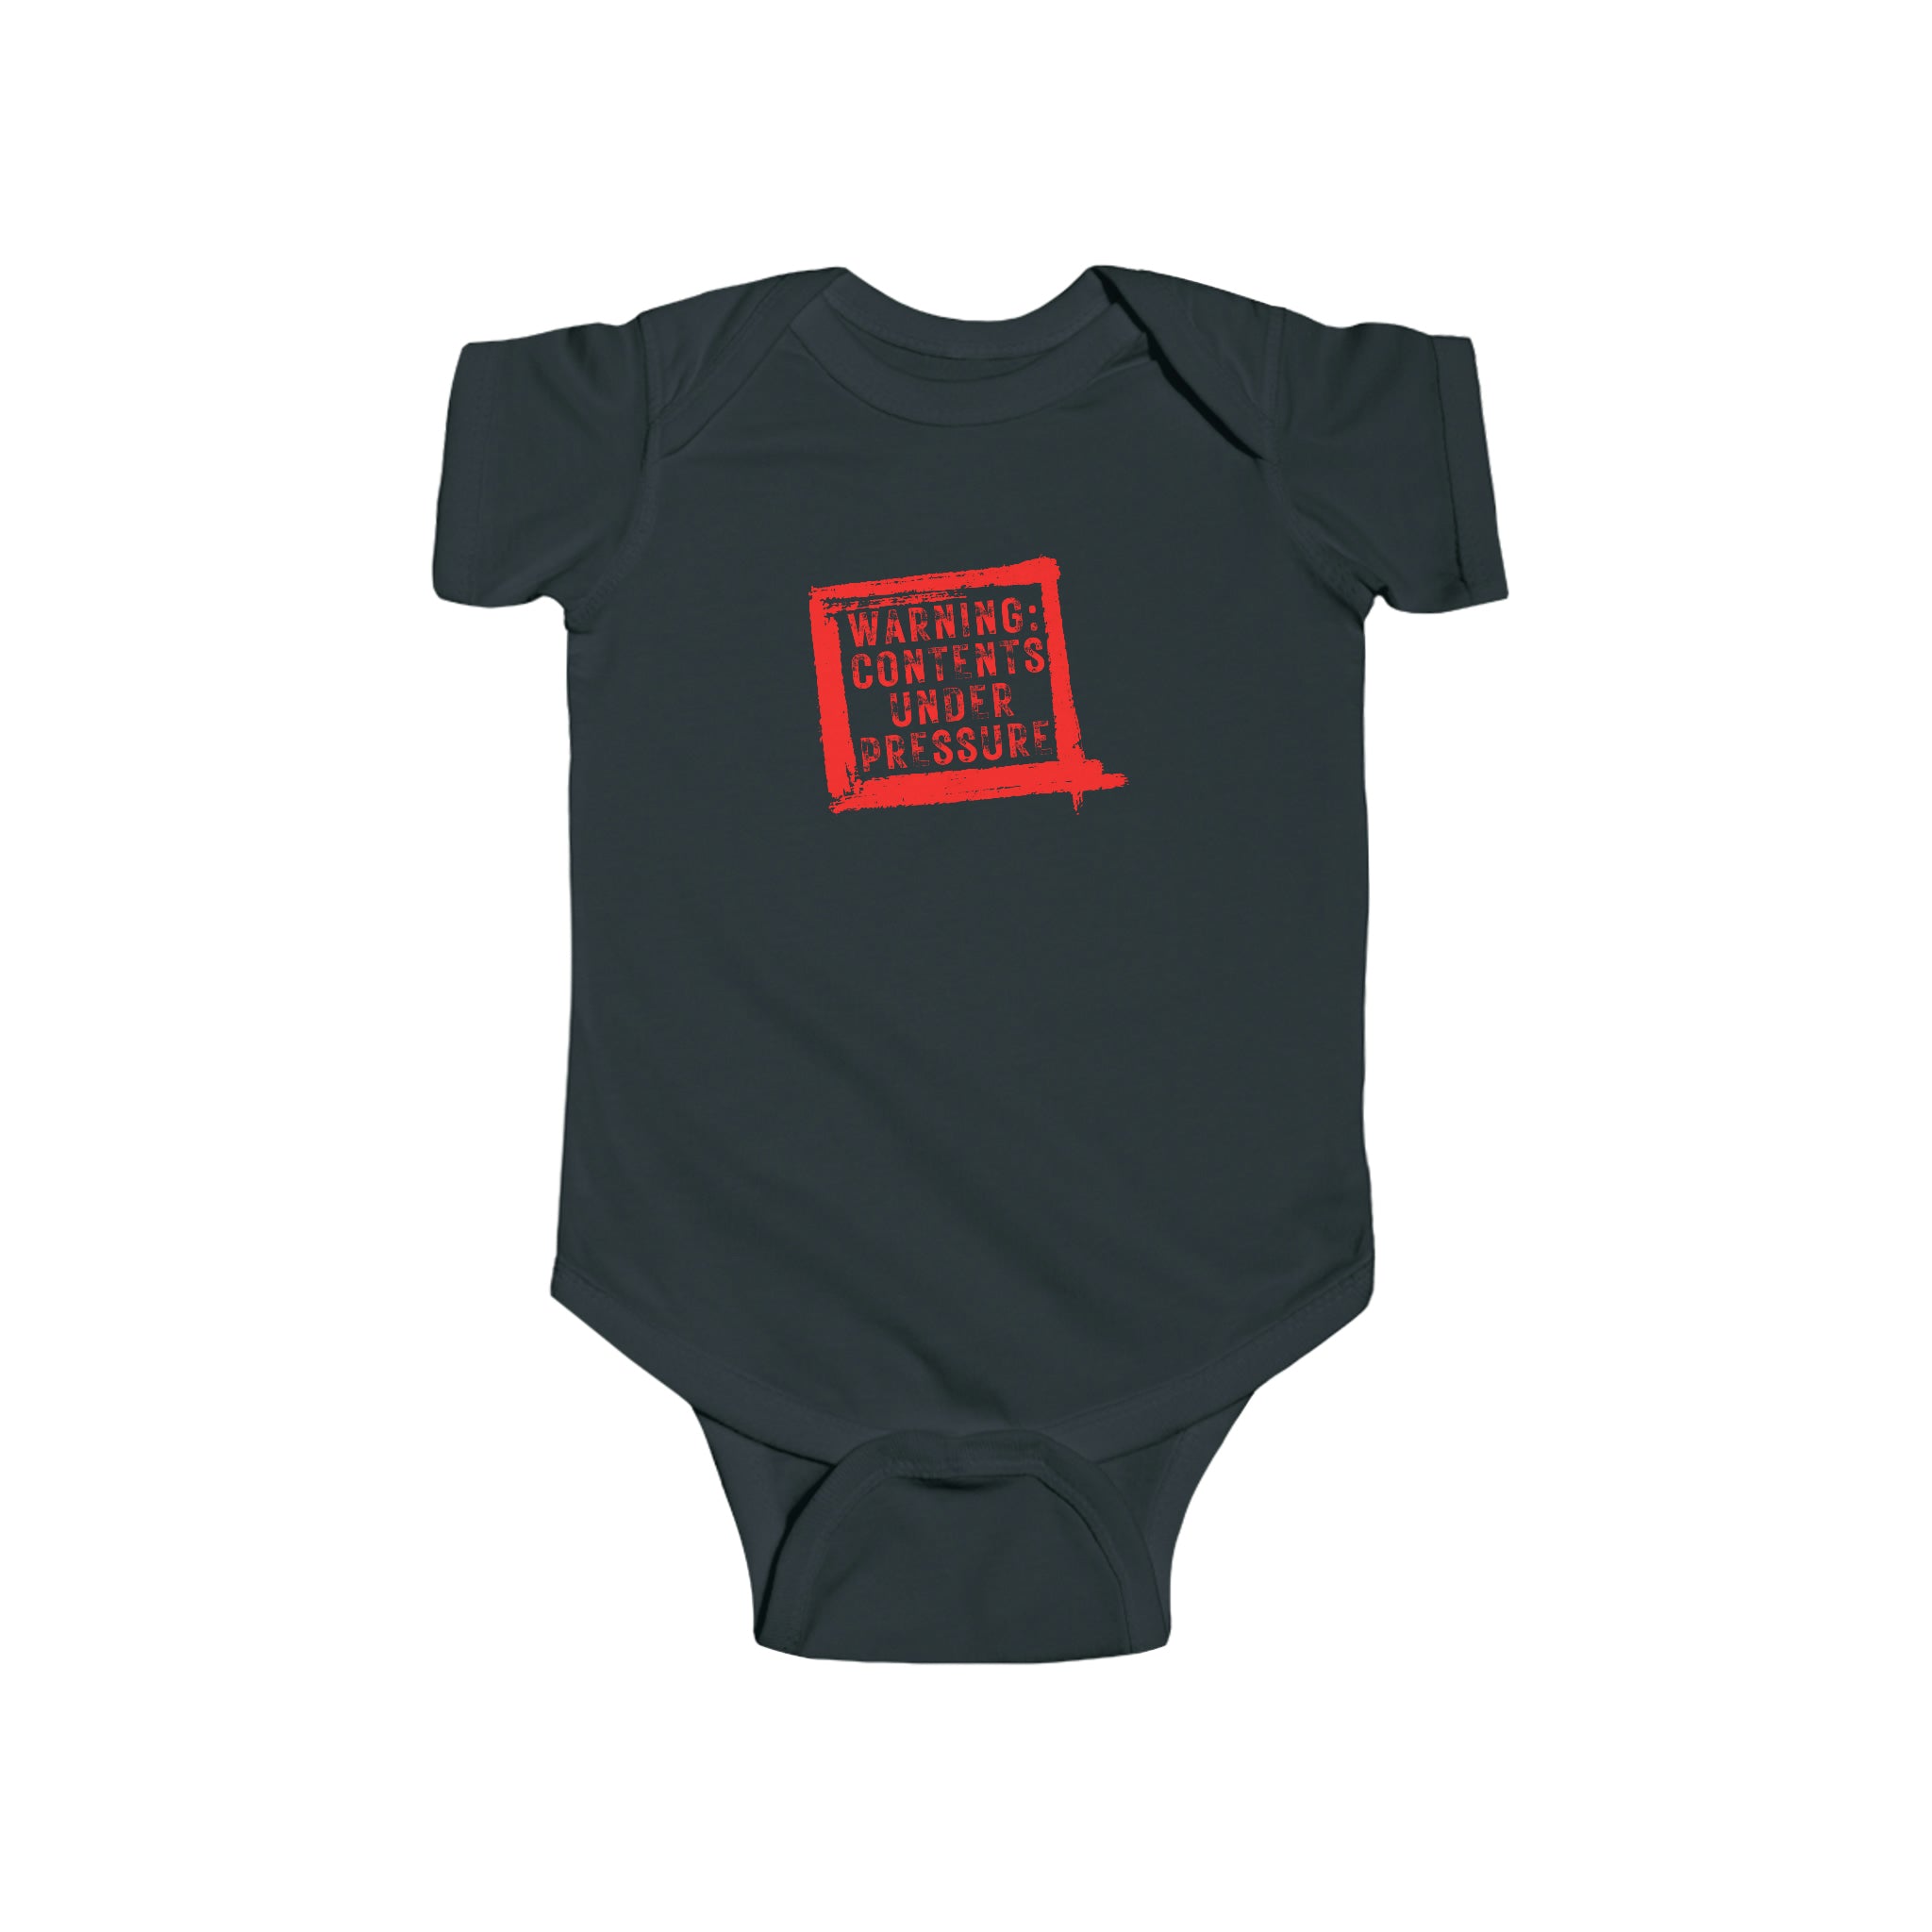 Contents Under Pressure - Infant Fine Jersey Bodysuit